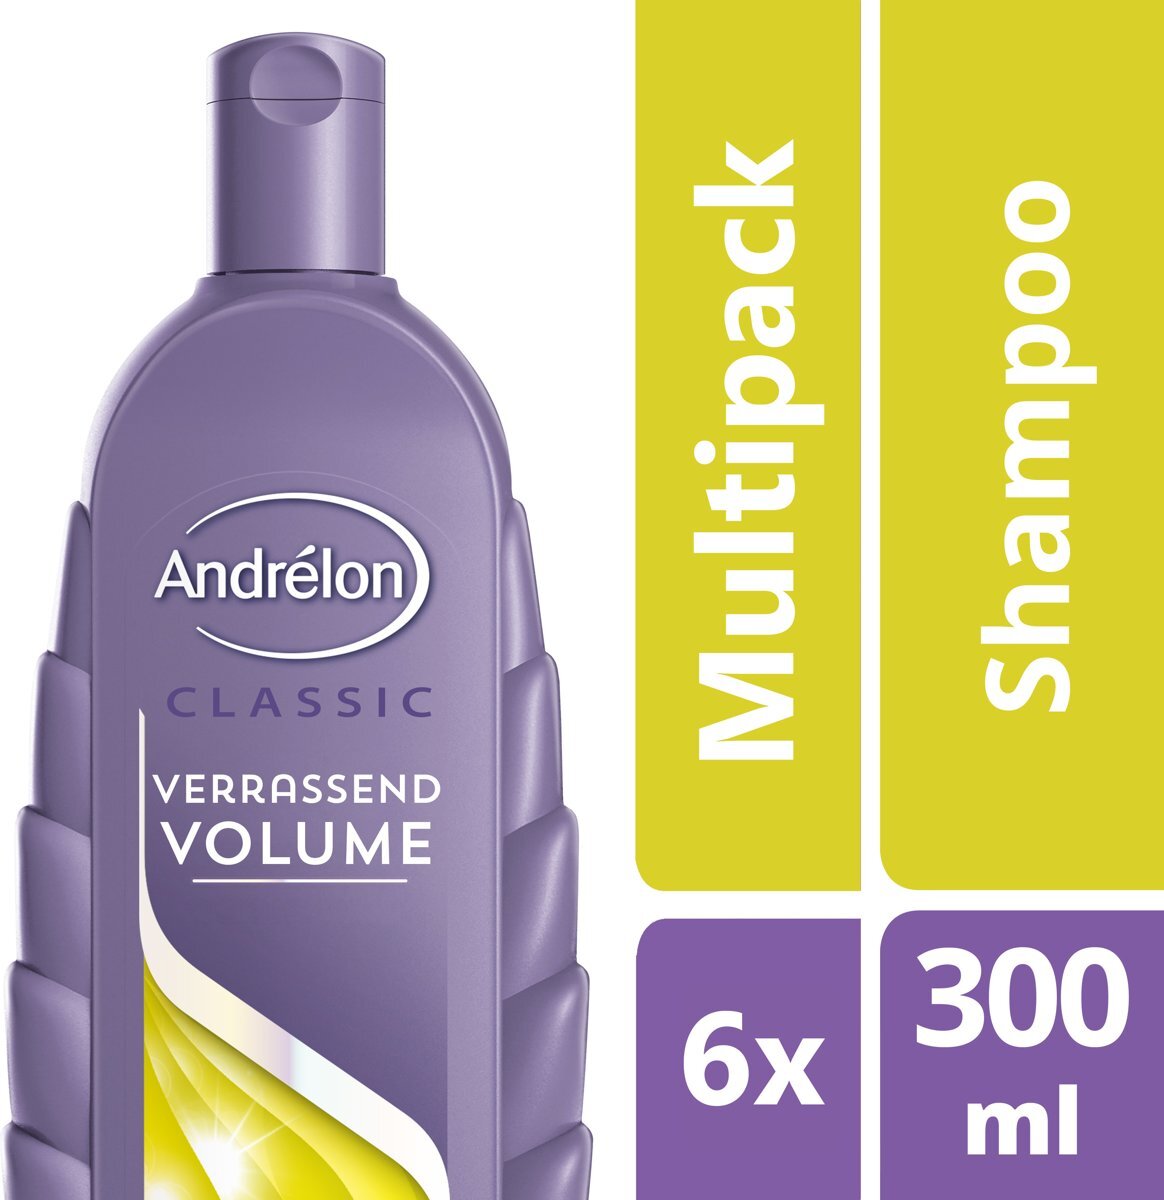 AndrÃ©lon Verrassend Volume - 6 x 300 ml - Shampoo - Voordeelverpakking